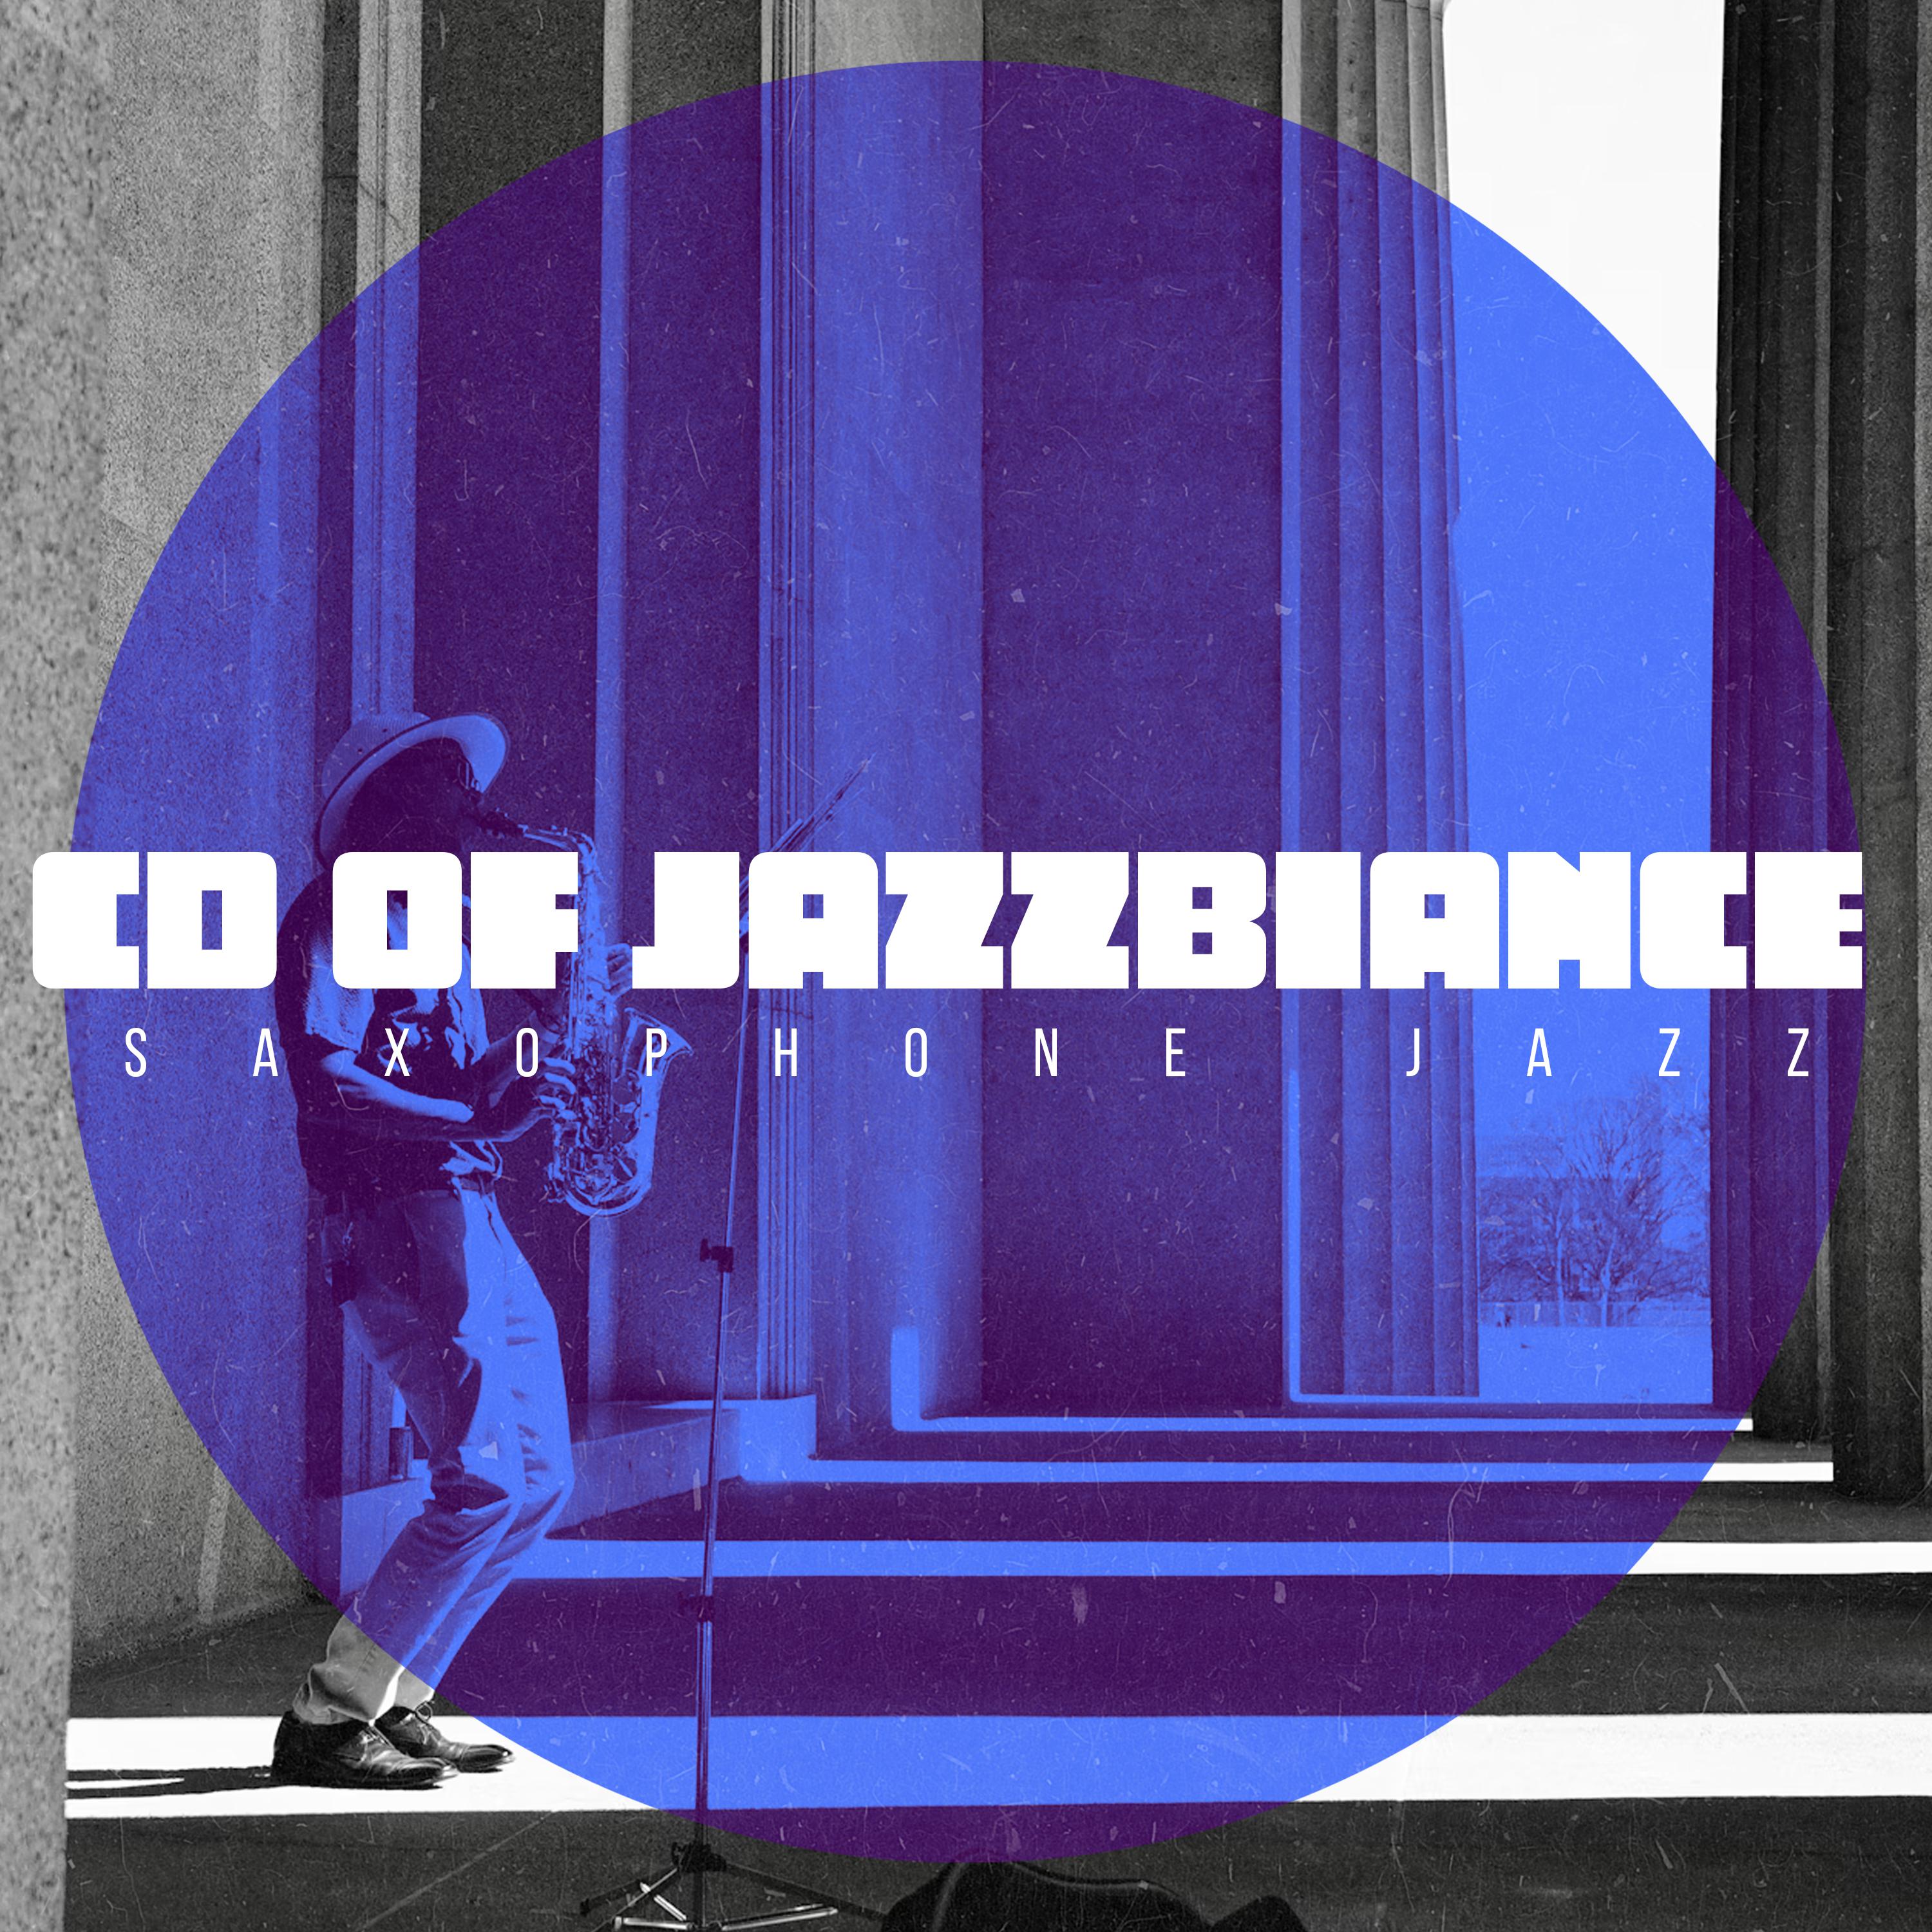 Saxophone Jazz - Journal Escalate